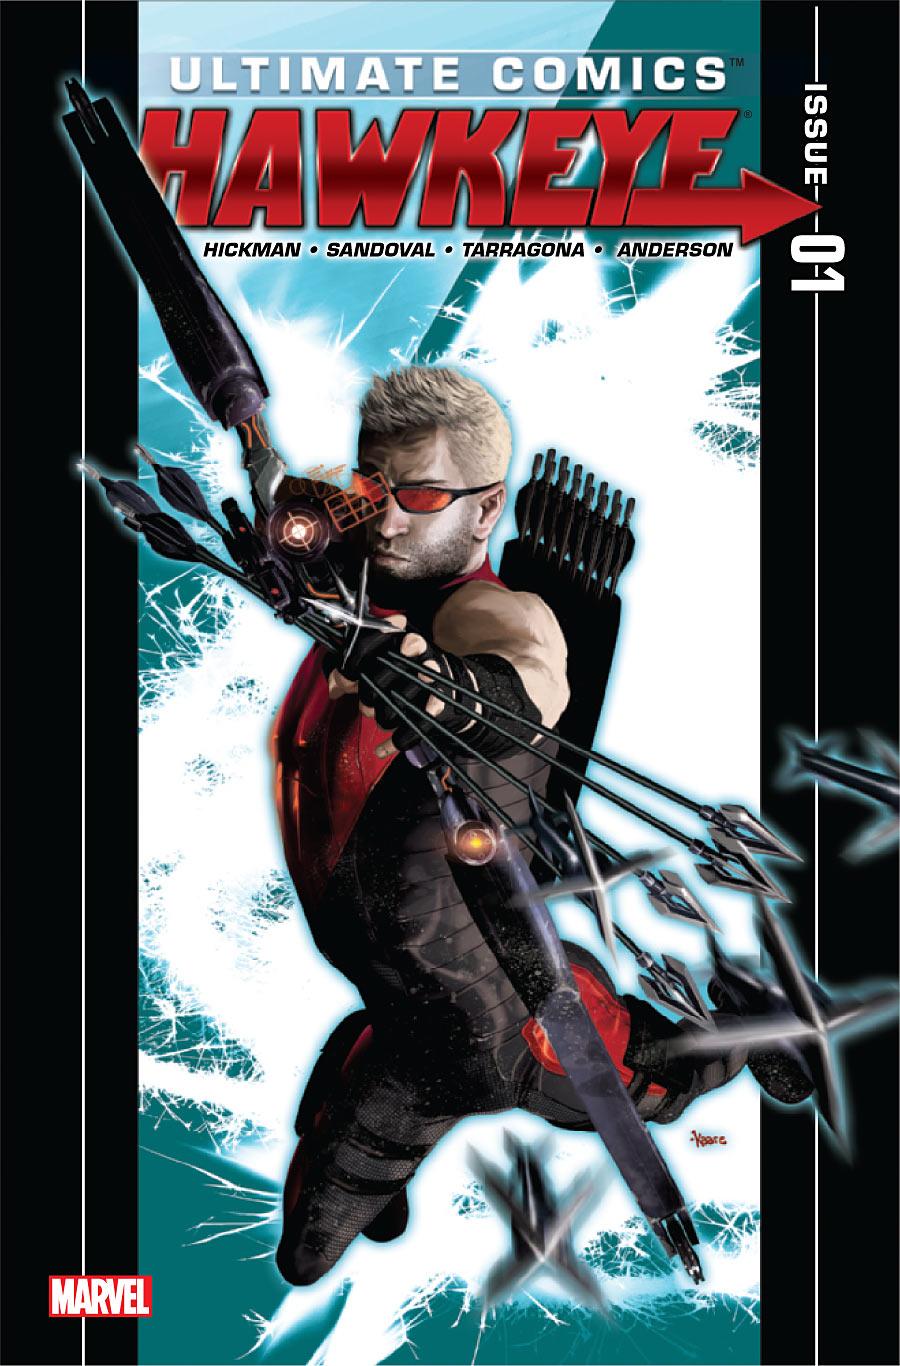 Ultimate Comics Hawkeye Vol. 1 #1